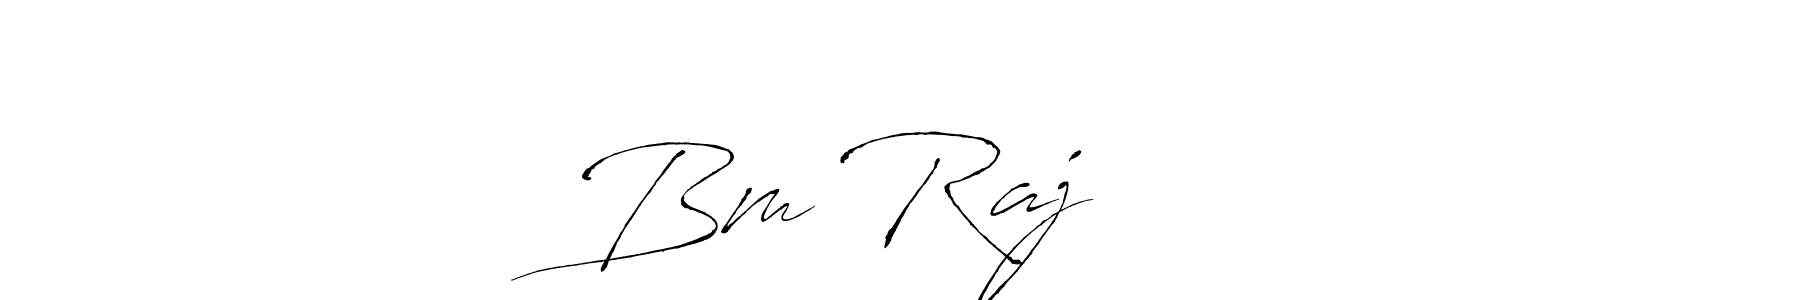 How to Draw Bm Rajगुरे signature style? Antro_Vectra is a latest design signature styles for name Bm Rajगुरे. Bm Rajगुरे signature style 6 images and pictures png